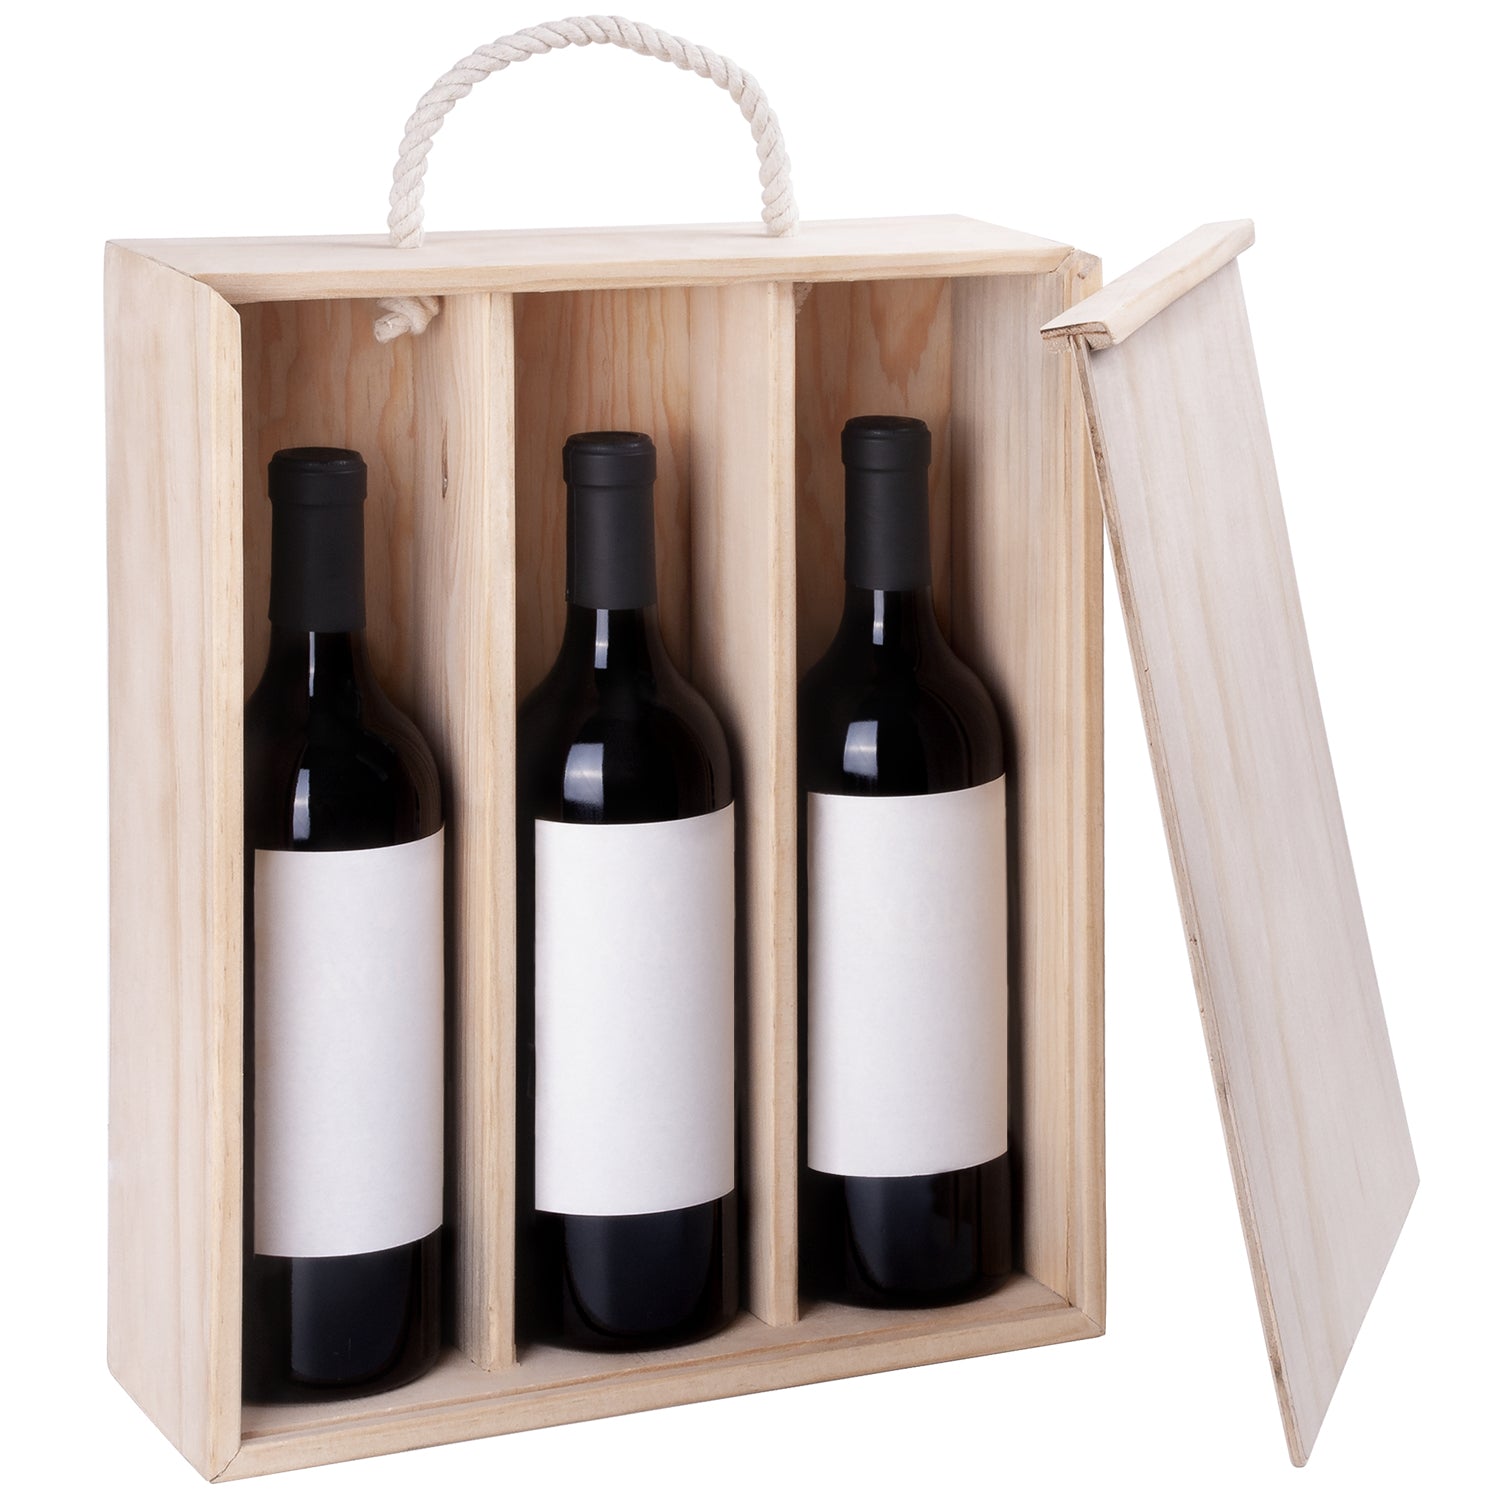 Caja madera regalo para 4 botellas vino